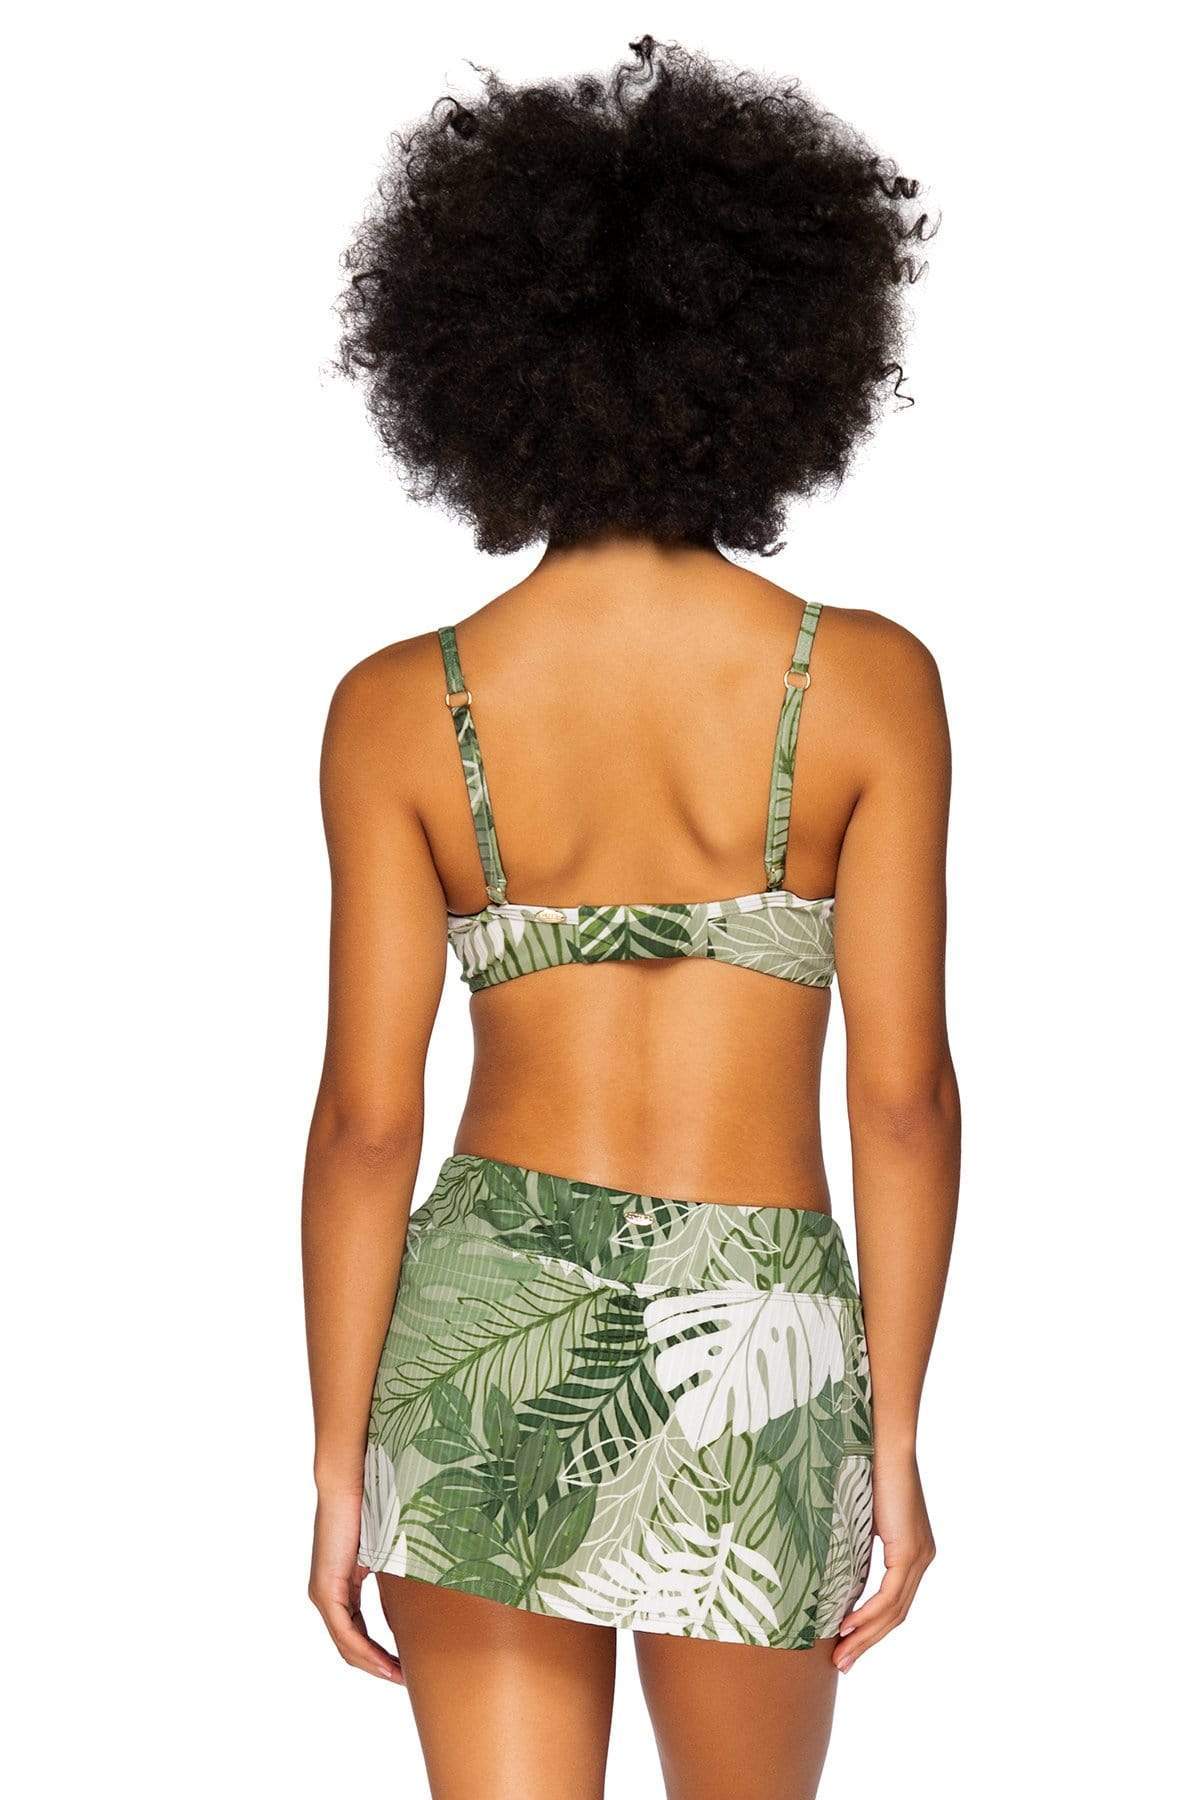 Bestswimwear -  Sunsets Palm Grove Sporty Swim Skirt